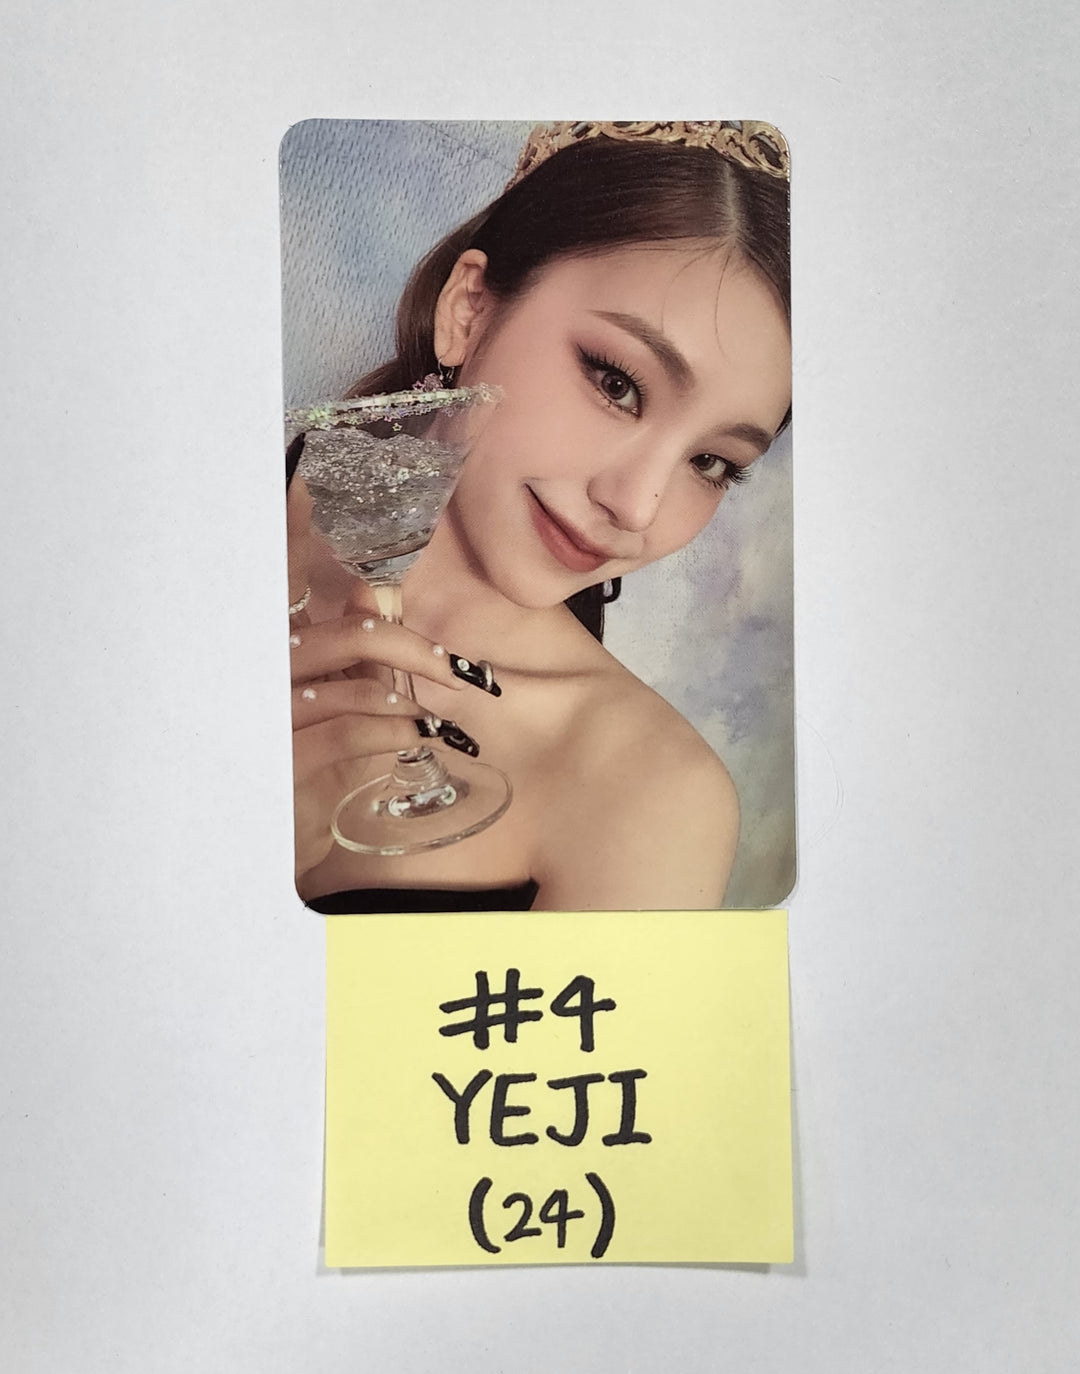 ITZY 'CHECKMATE' - Official Photocard [Yeji, Lia, RJ]